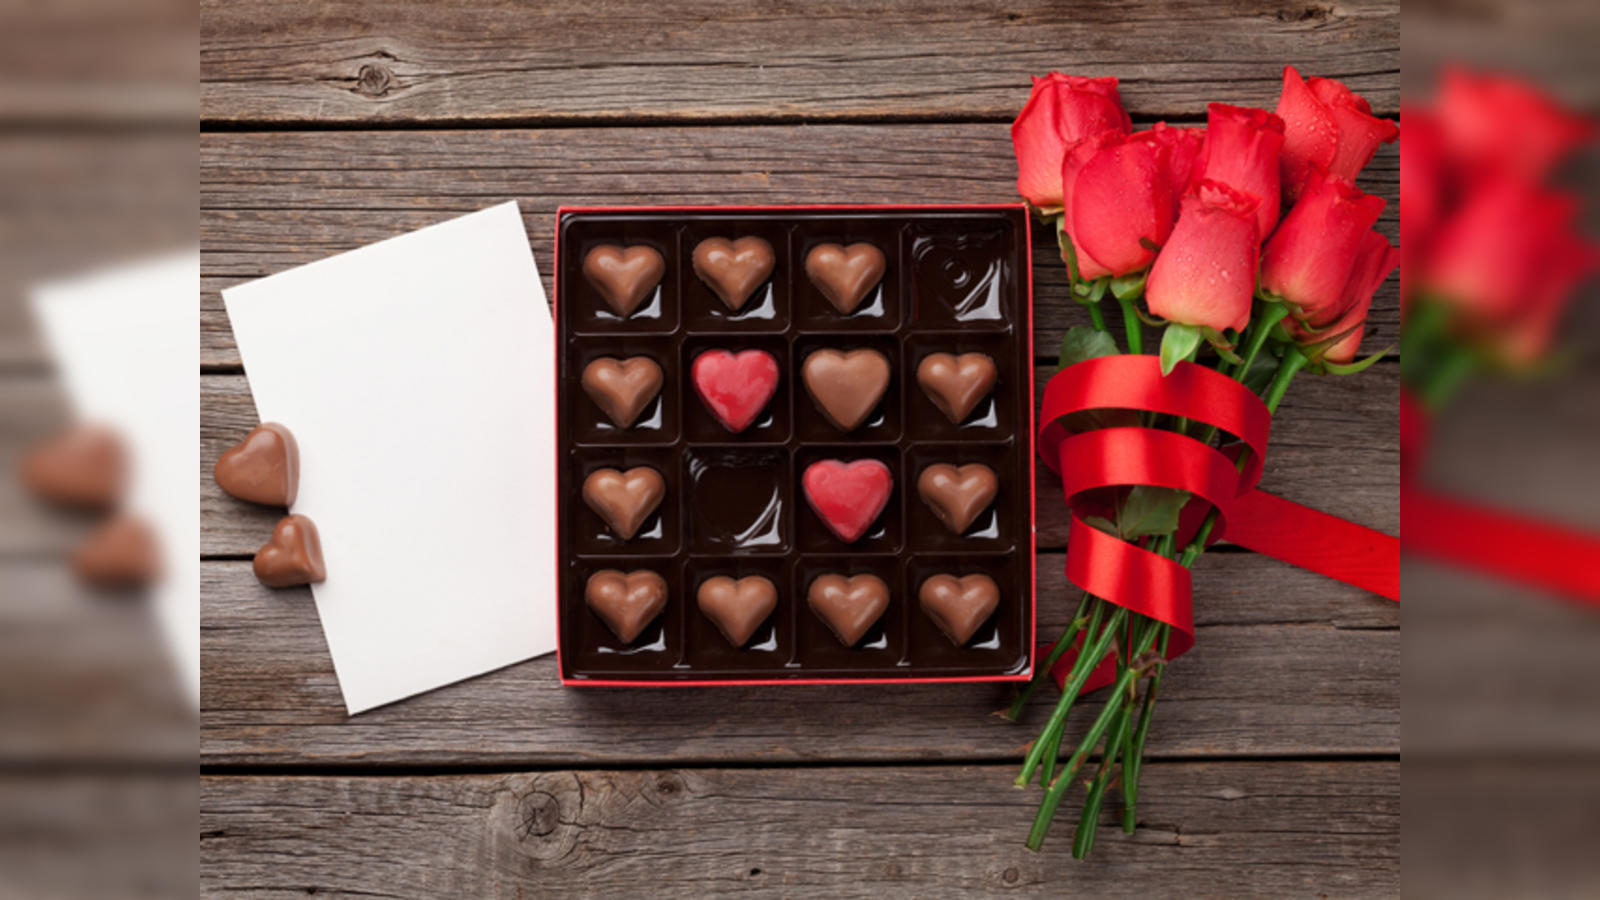 Jack Dorsey's $7 Million Valentine's Day Gift to Himself